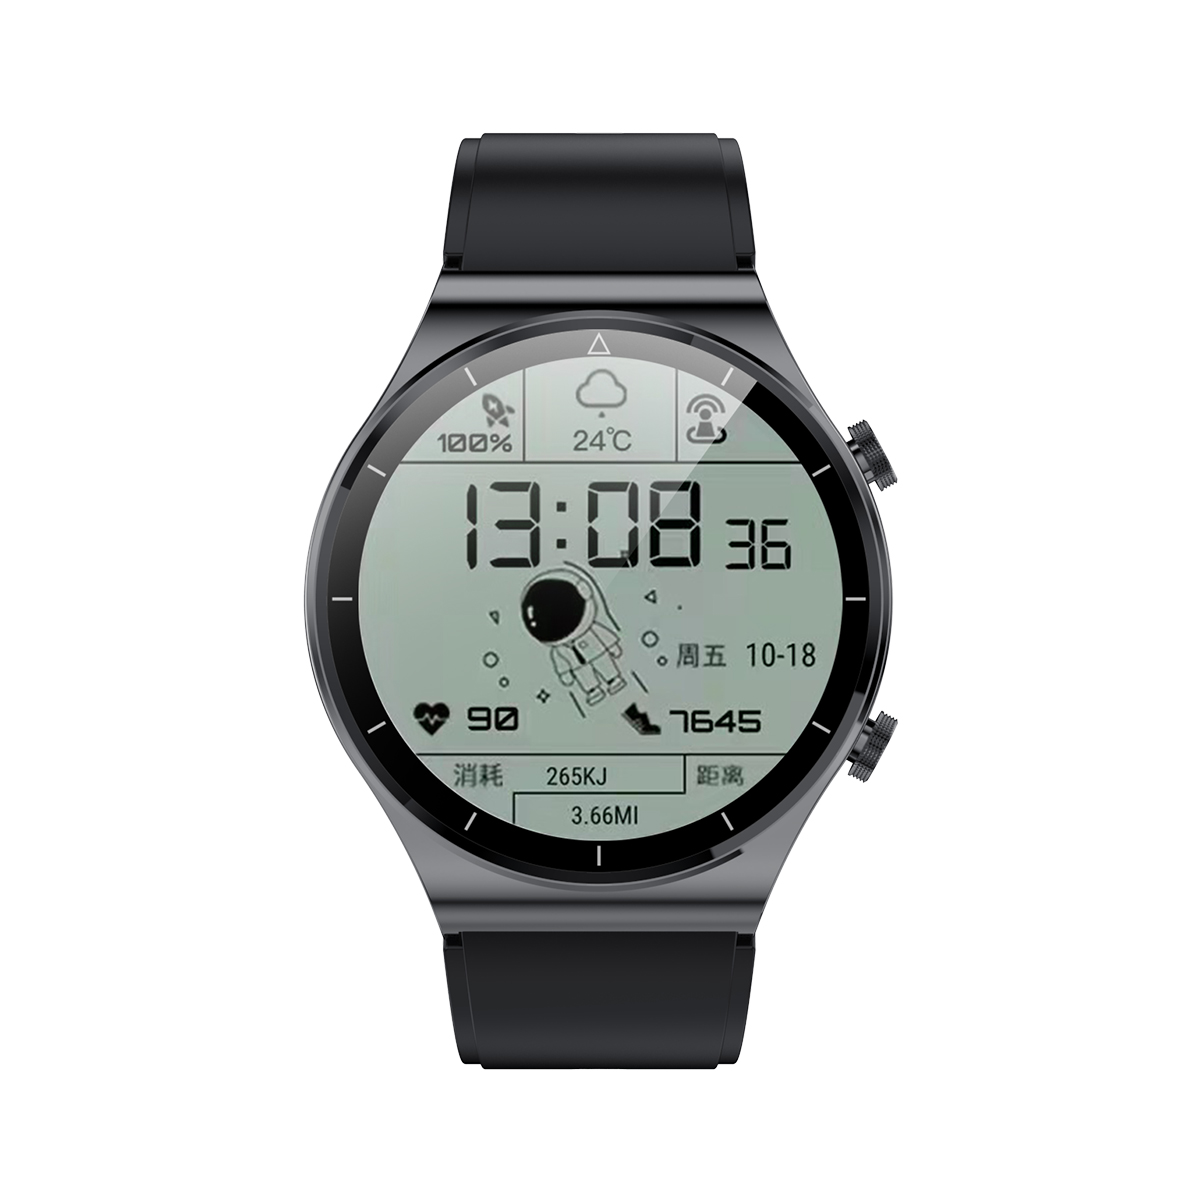 Vanzone F2T Smart Watch 